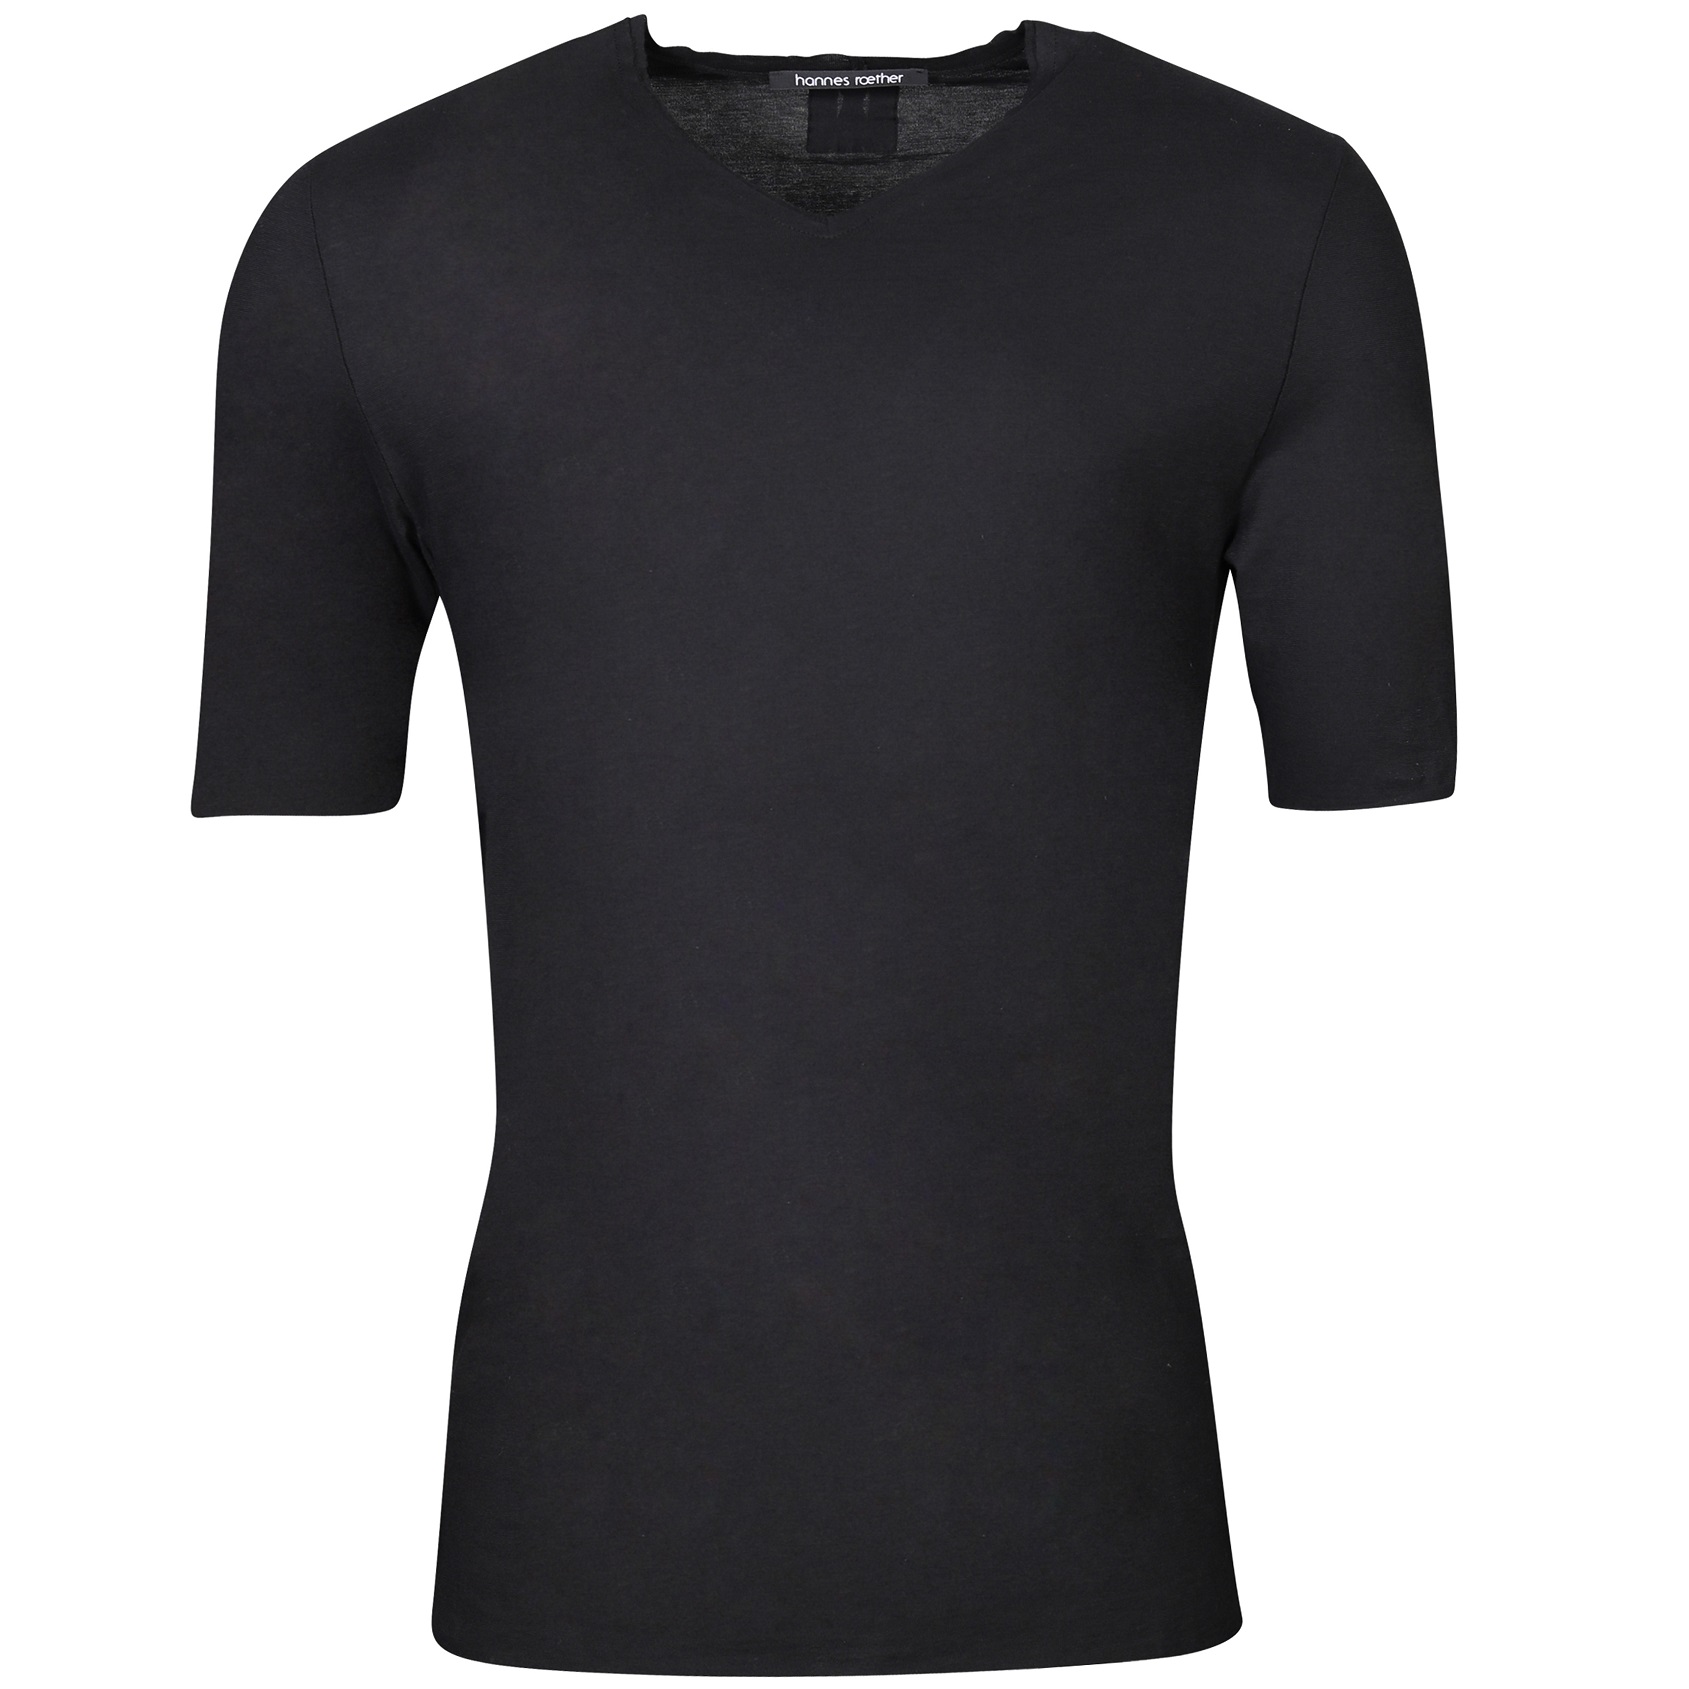 Hannes Roether V-Neck T-Shirt in Black XL